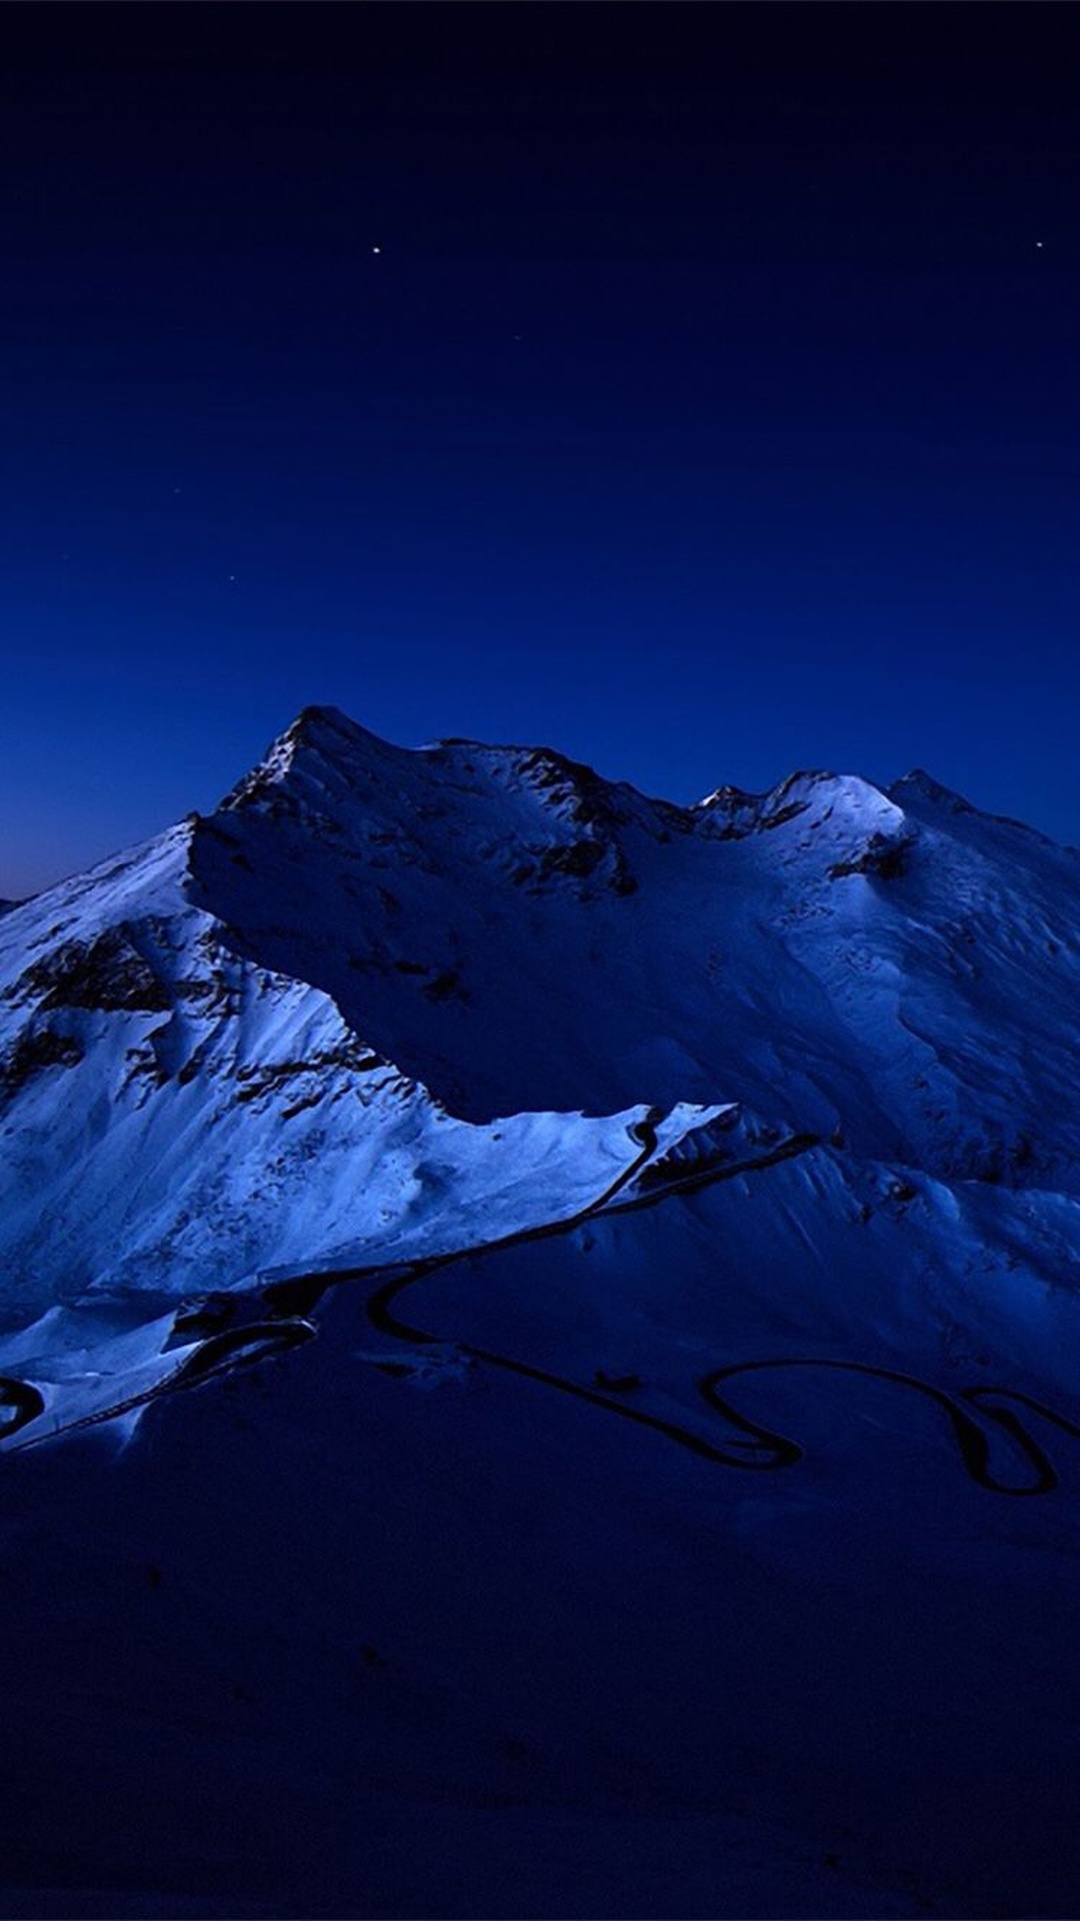 Night Sky Over Snow Mountain Peak iPhone 6 Plus HD Wallpaper